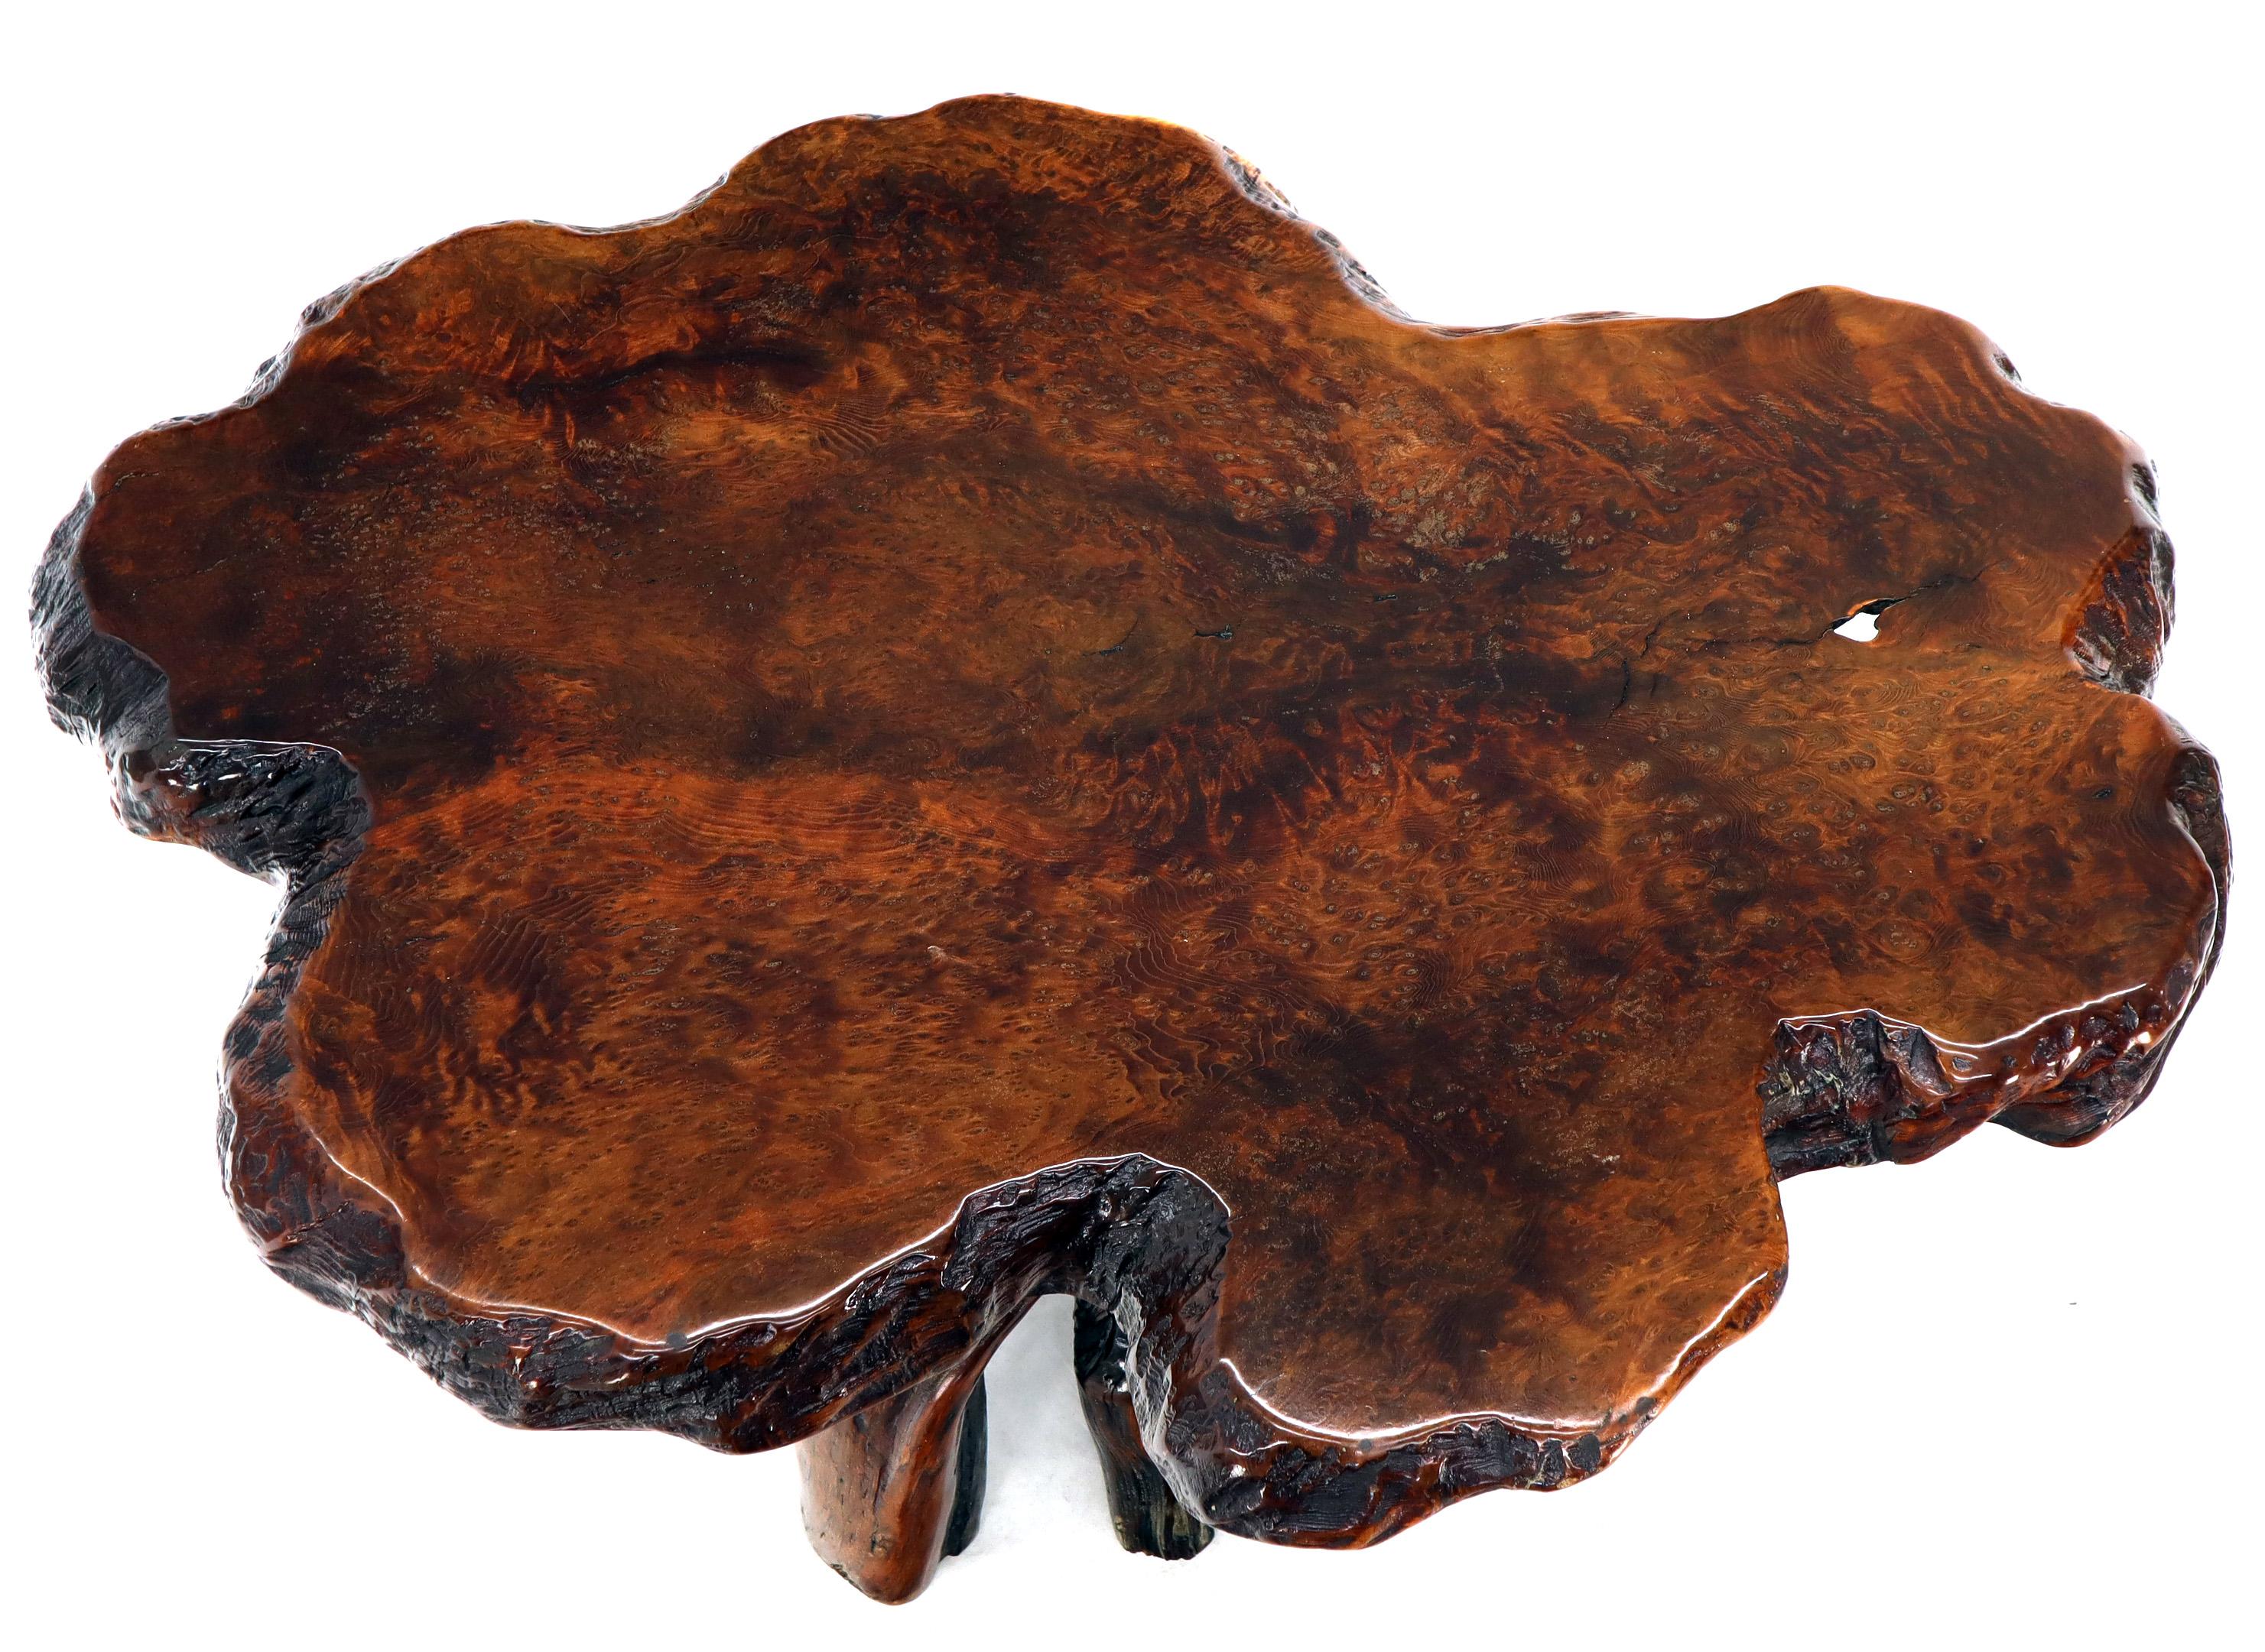 Gorgeous amber tone vivid pattern burl wood natural top center table guerdon.